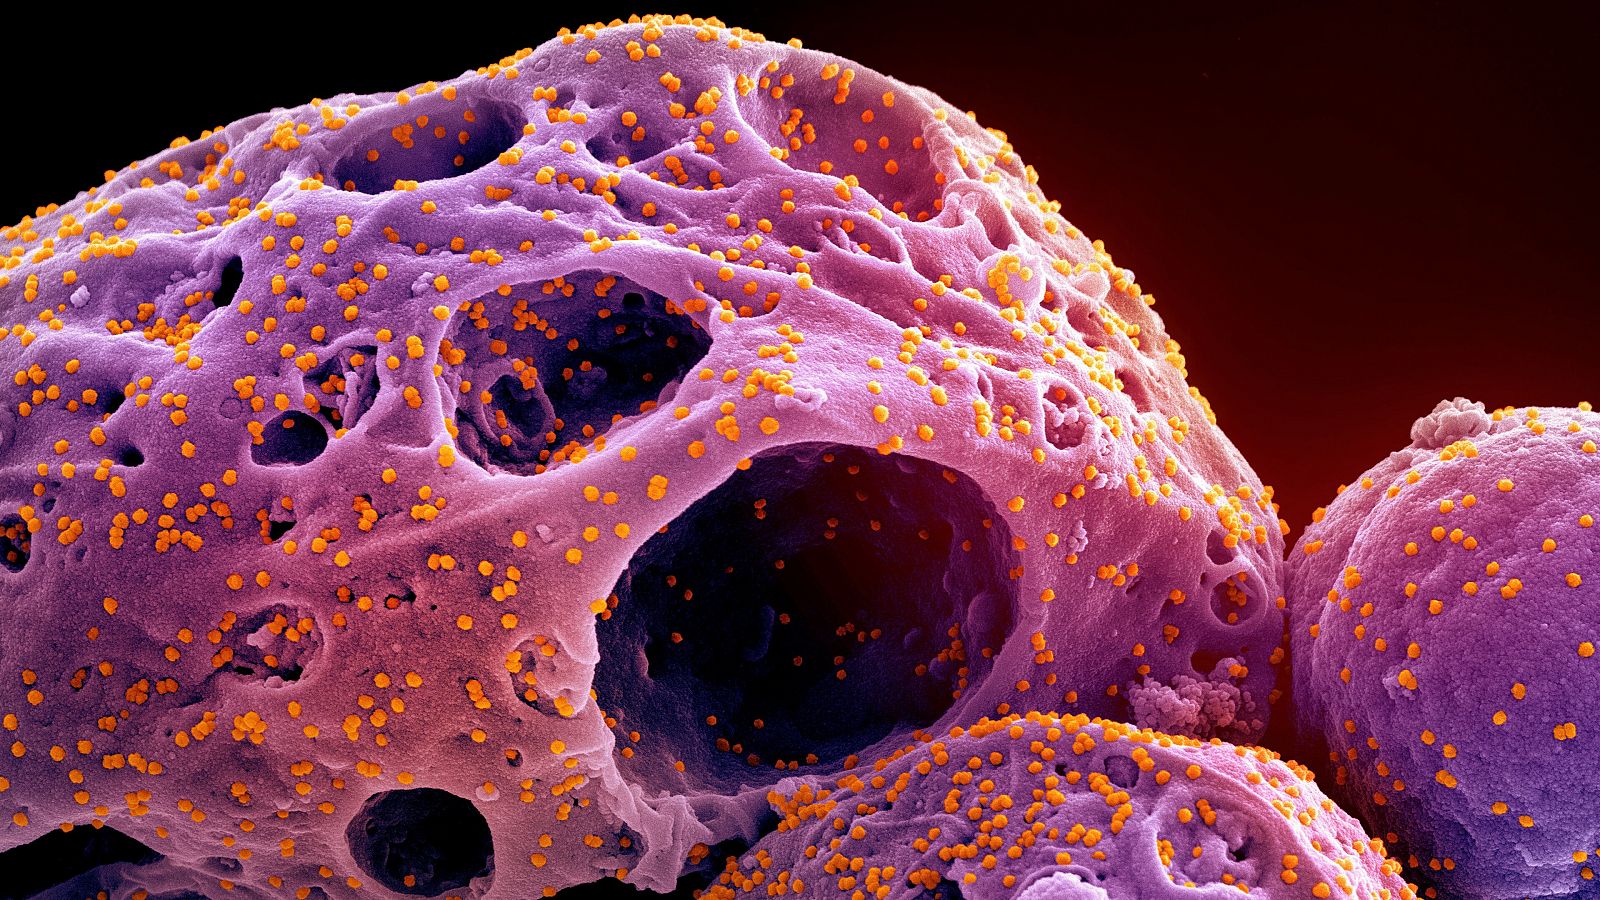 Kraken, variante ómicron: Imagen obtenida con un microscopio electrónico que muestra células infectadas.